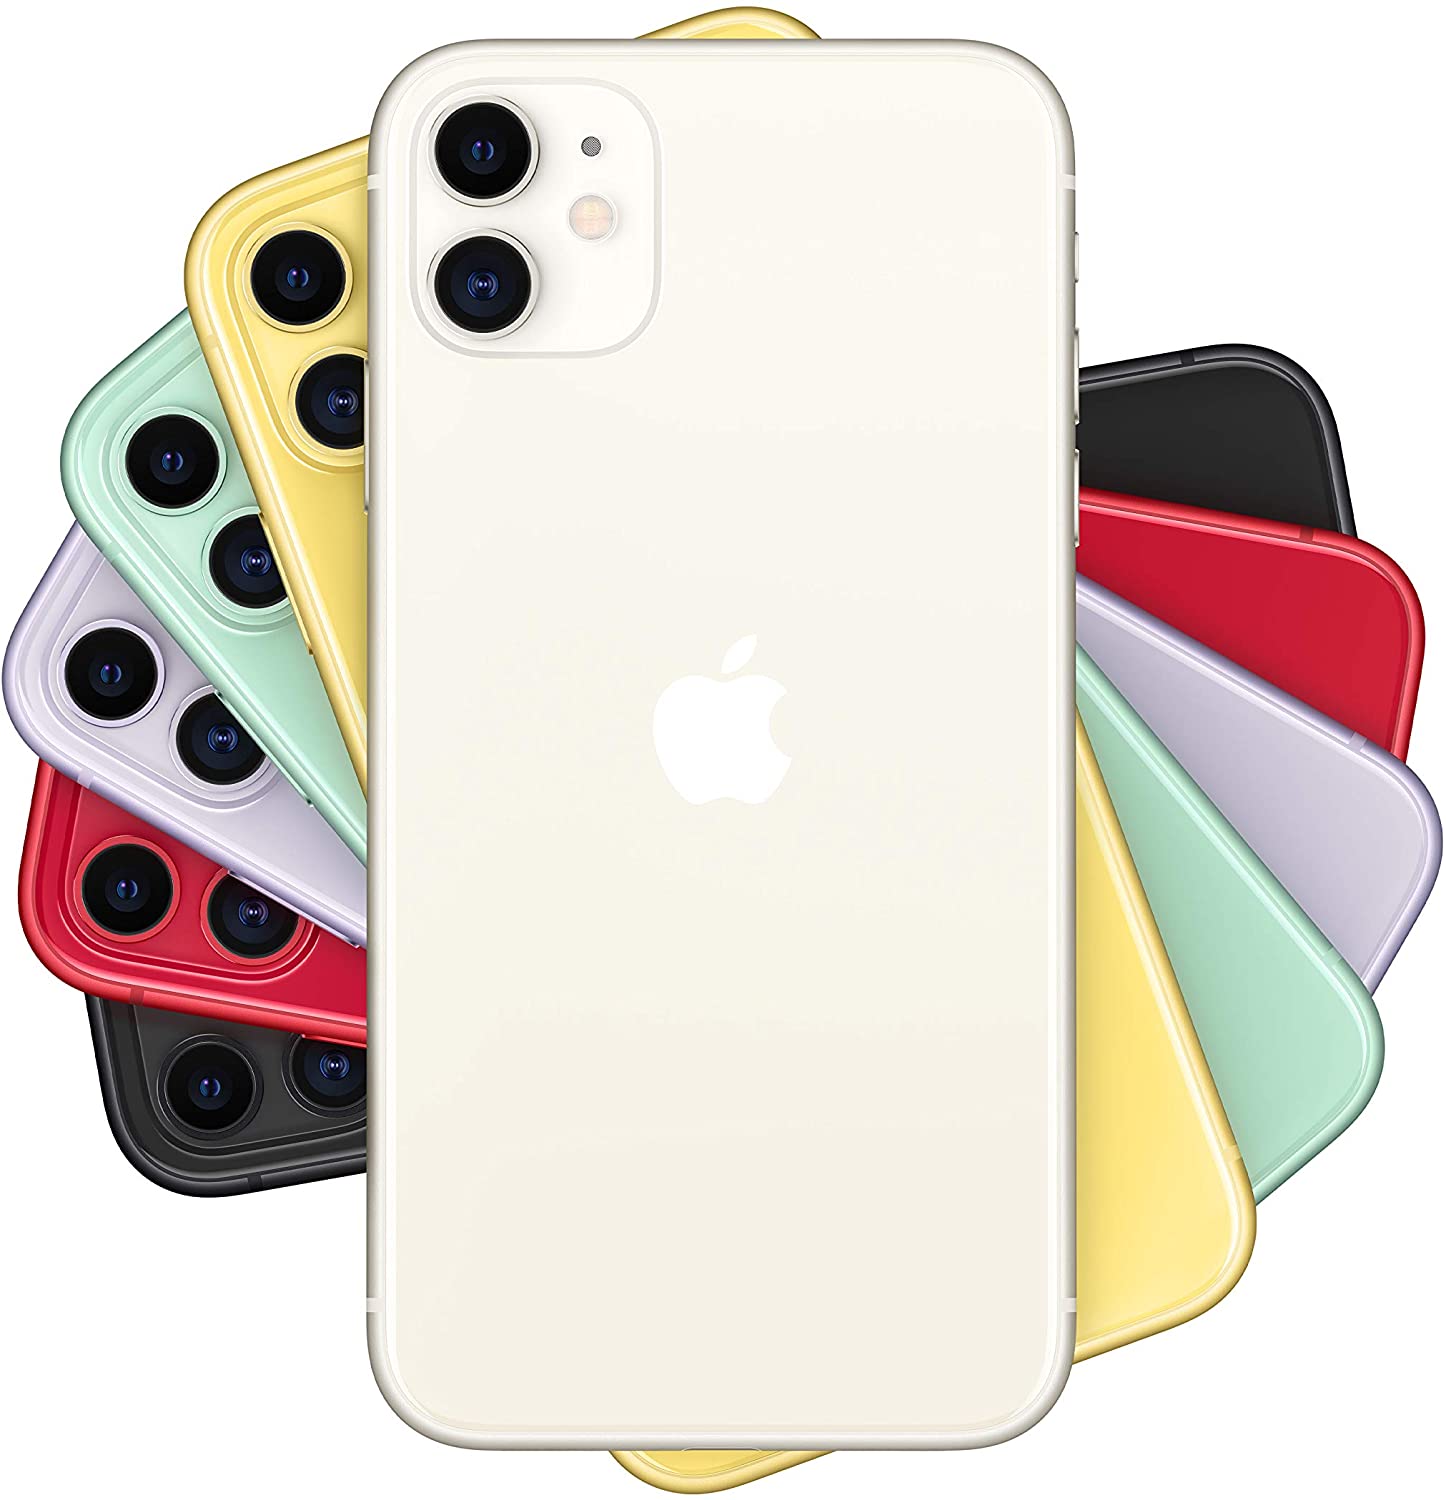 Apple iPhone 11 (64GB) - Bianco | Apple iPhone